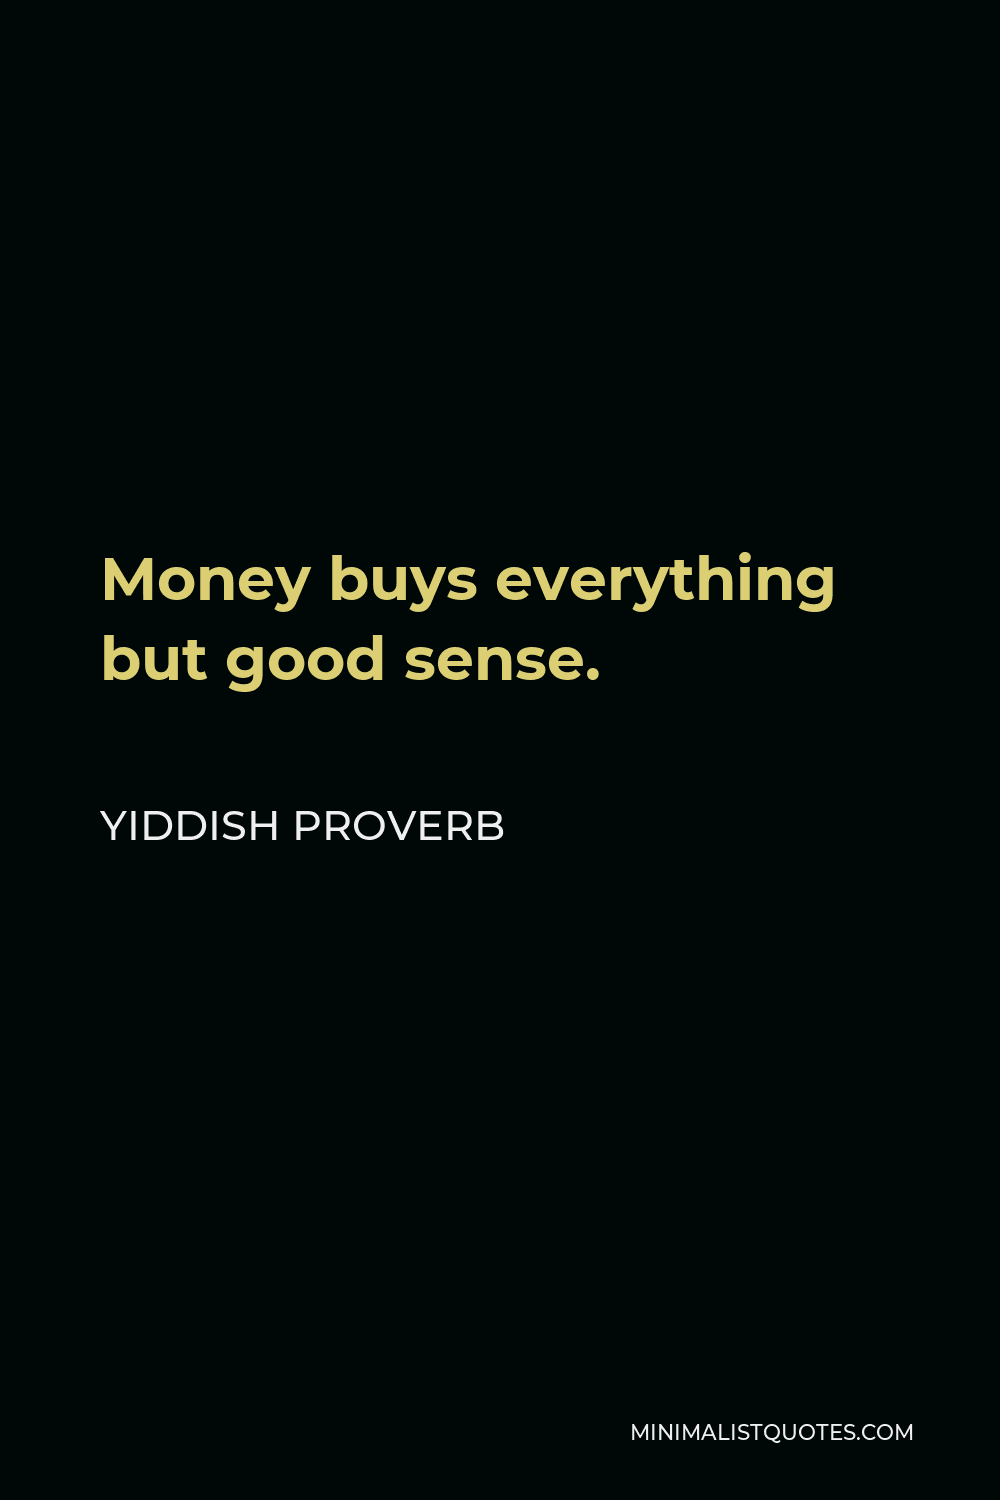 Yiddish Proverb Quote - Money buys everything but good sense.